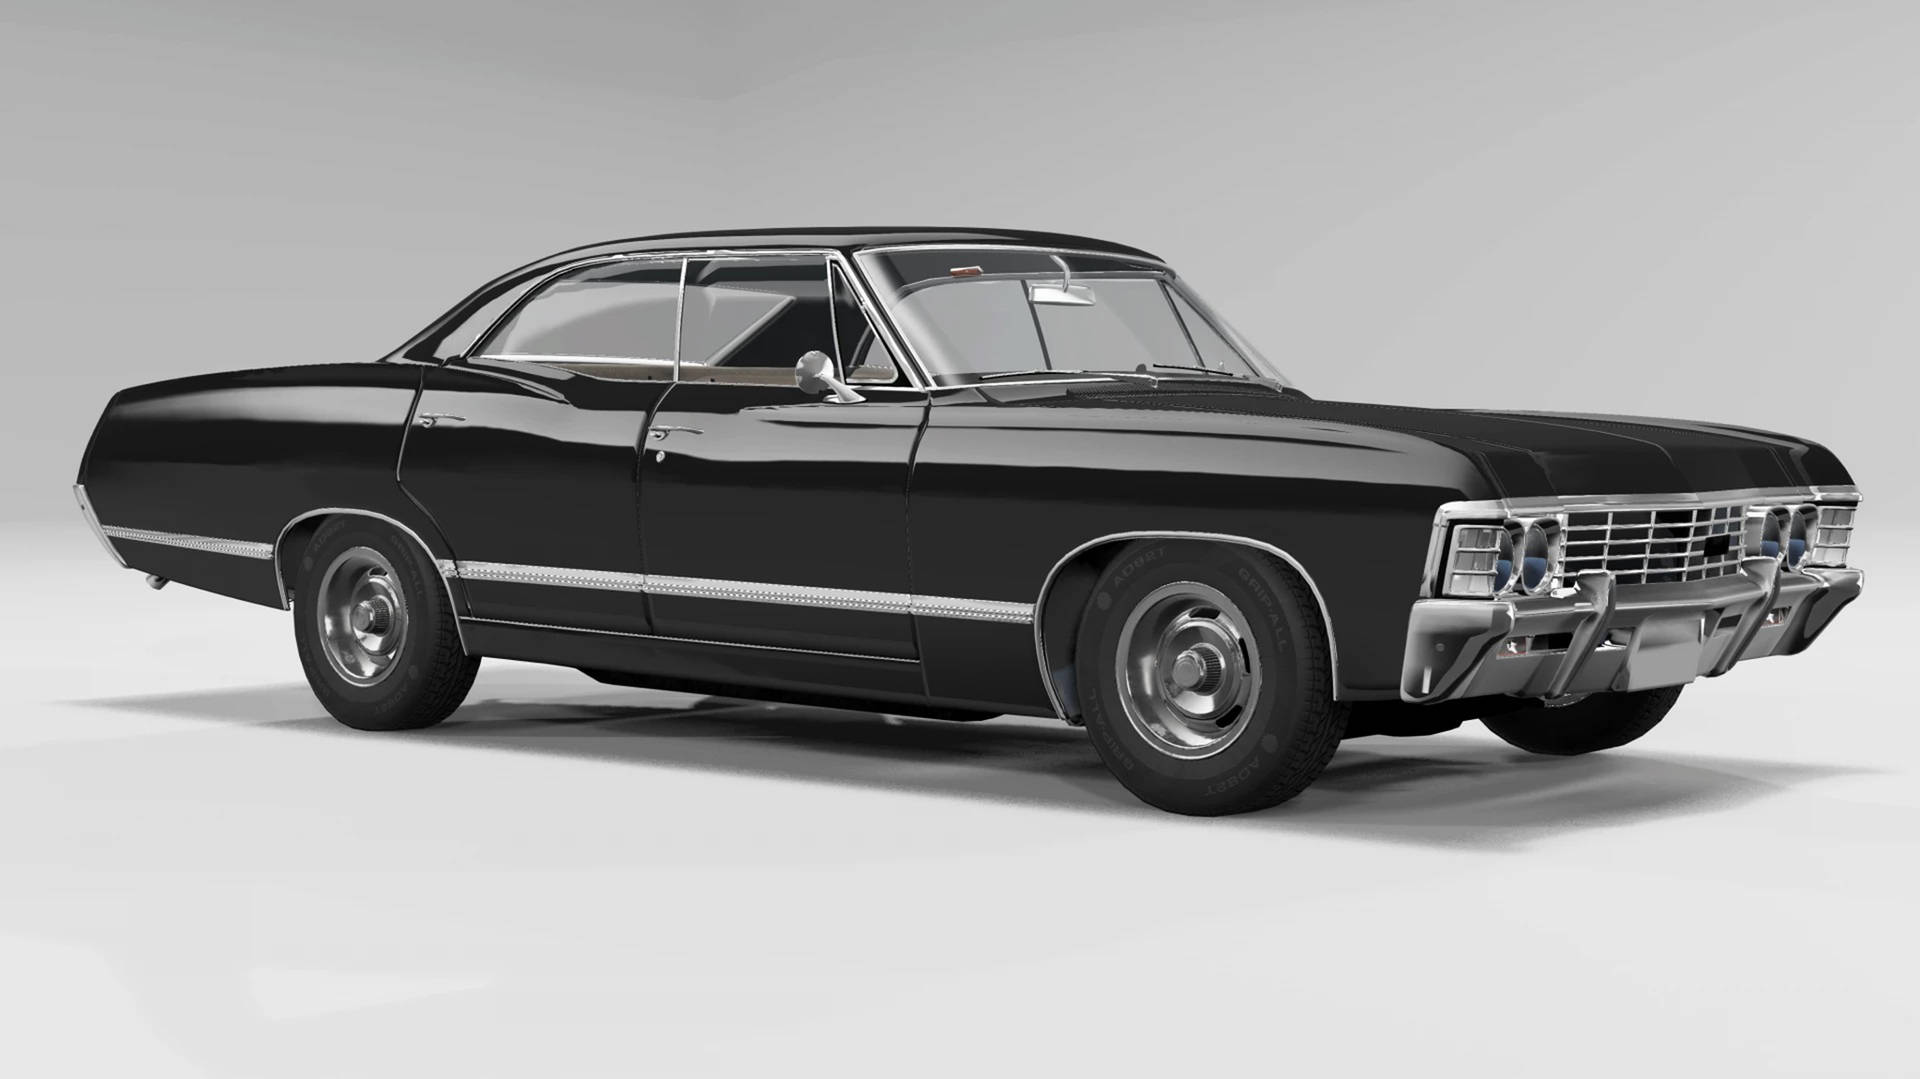 Caption: Vintage Excellence - 1967 Chevrolet Impala Background